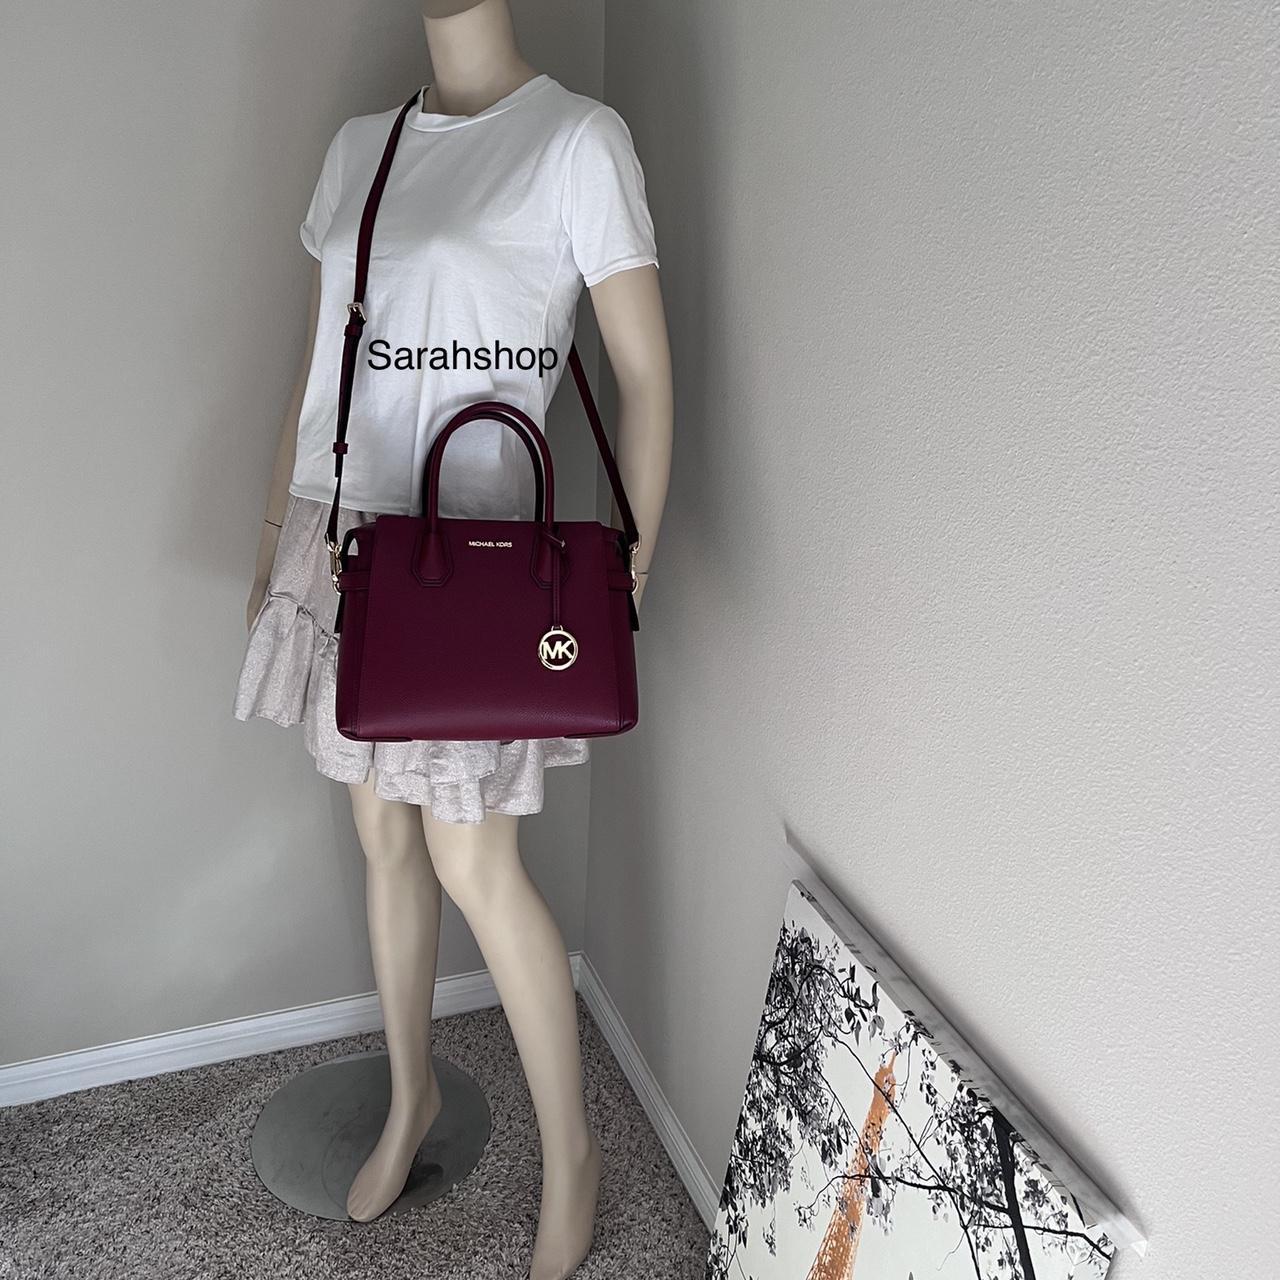 Michael Kors Women's Burgundy Bag | Depop